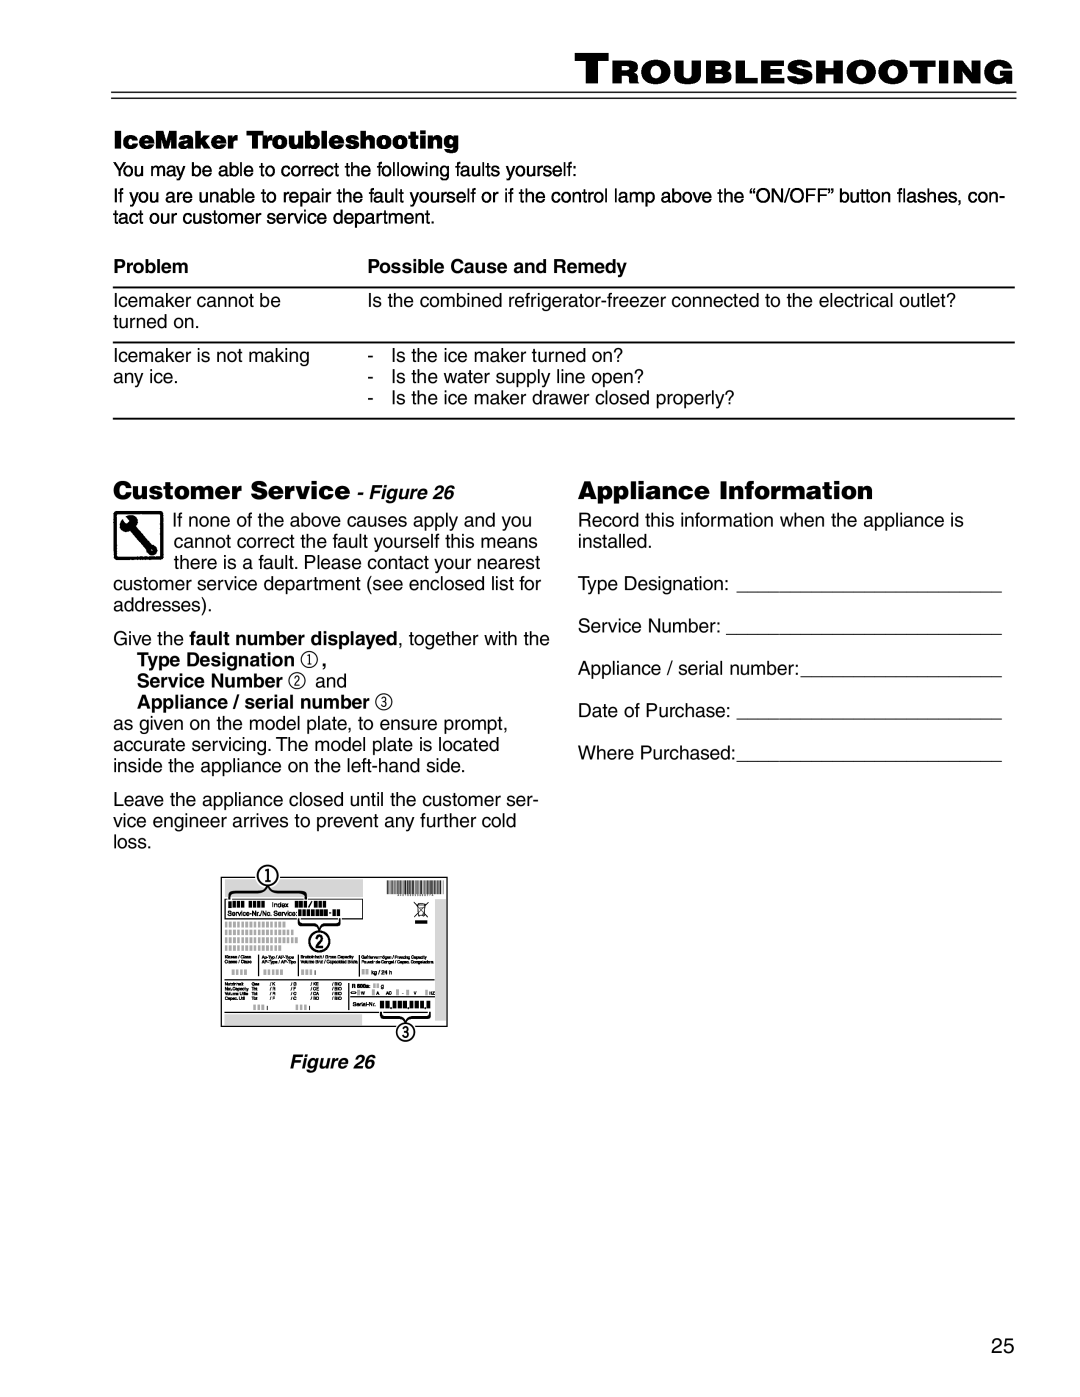 Liebherr HCS 7081411-00, HC 7081411-00 manual IceMaker Troubleshooting, Customer Service - Figure, Appliance Information 